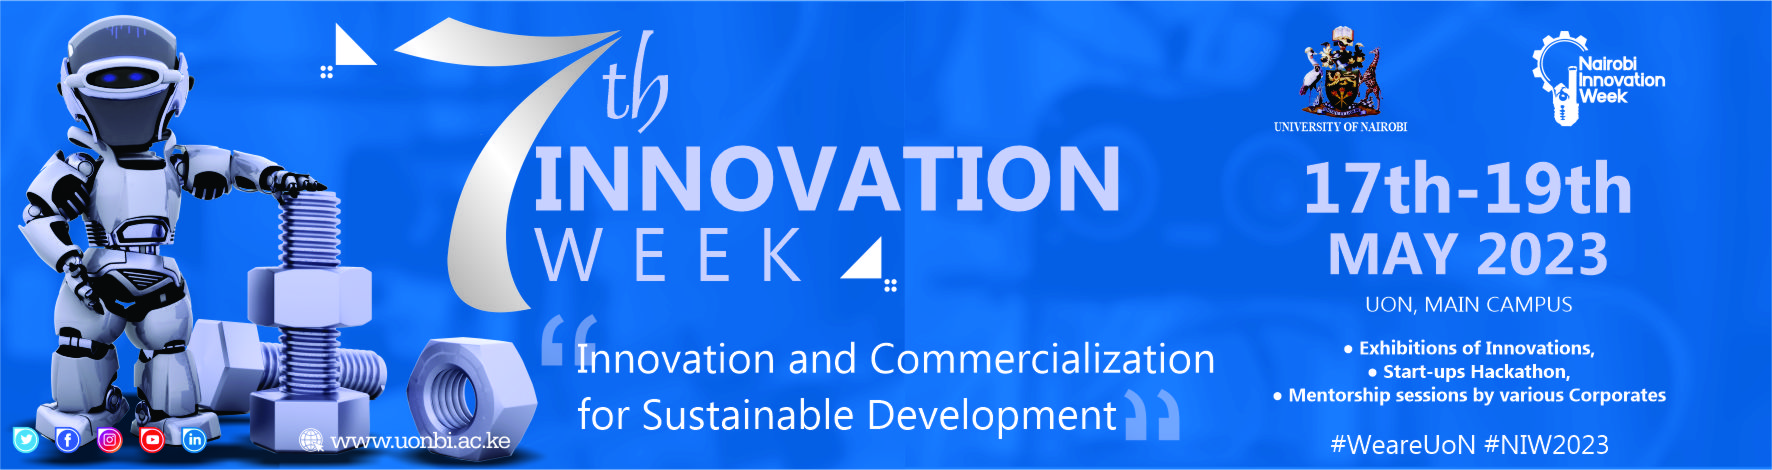 Nairobi Innovation Week 2023